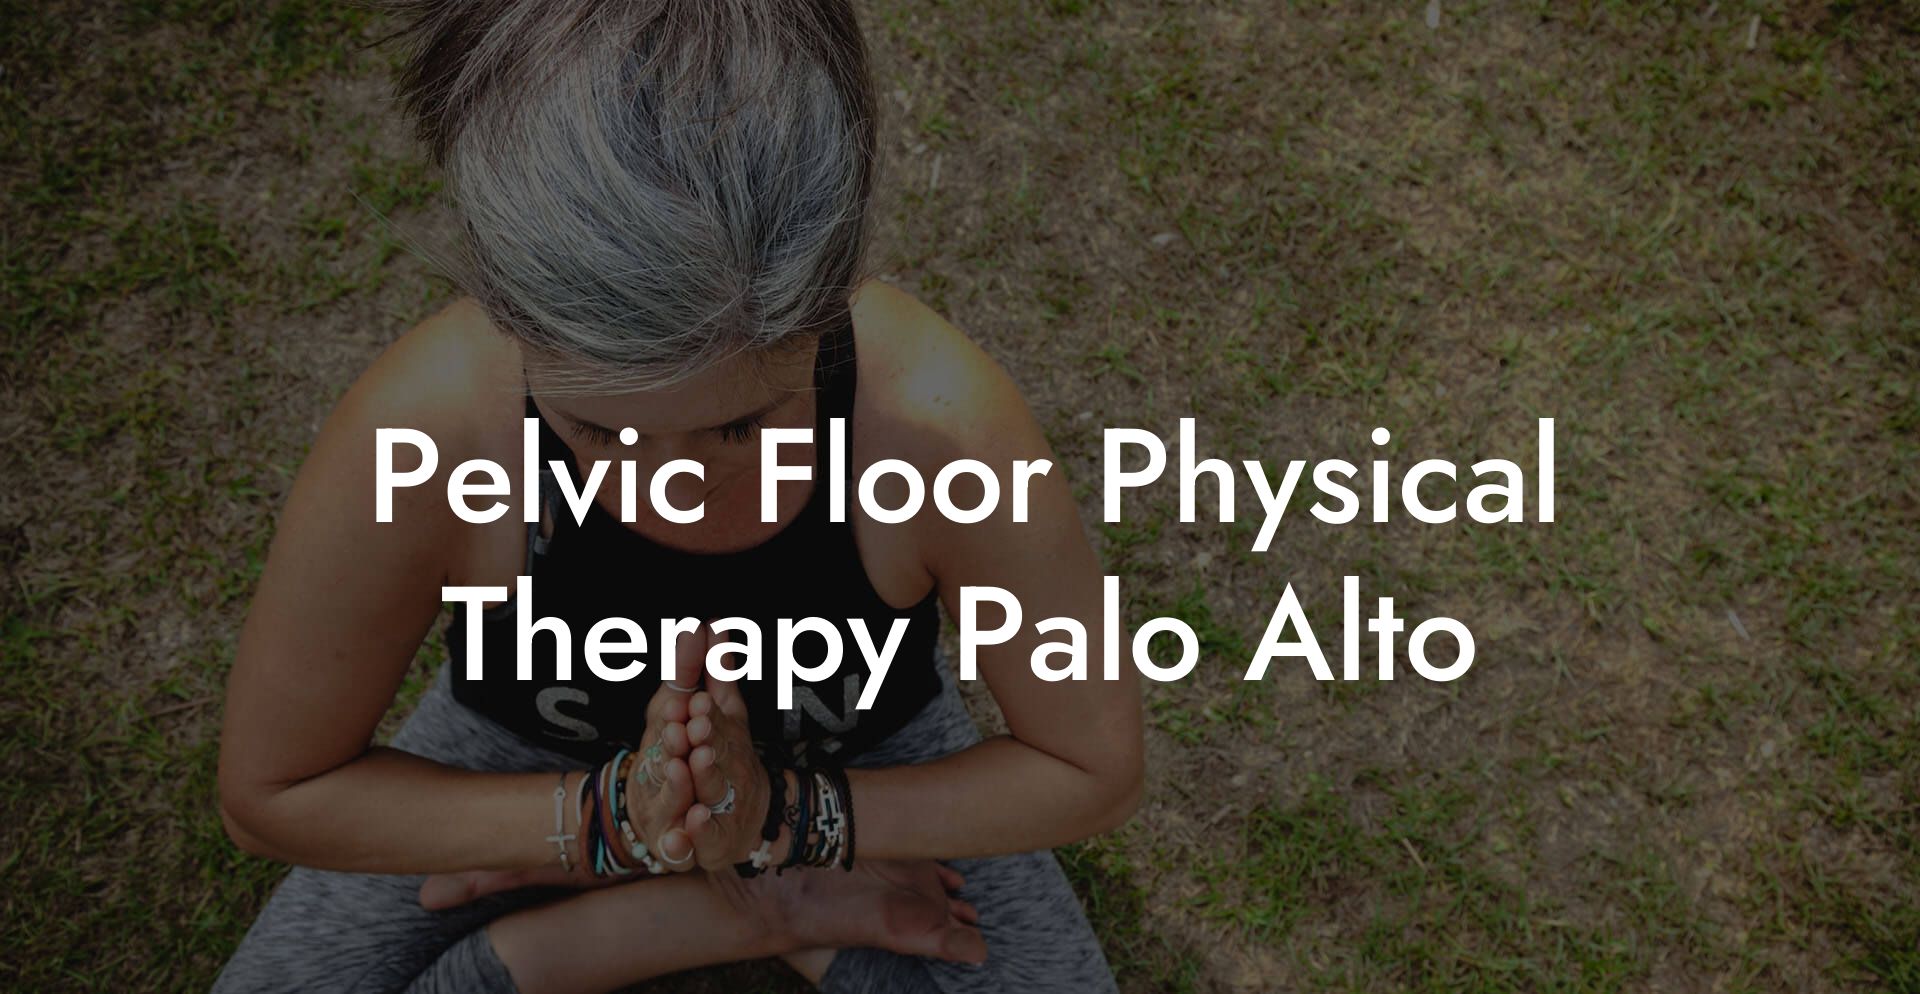 Pelvic Floor Physical Therapy Palo Alto